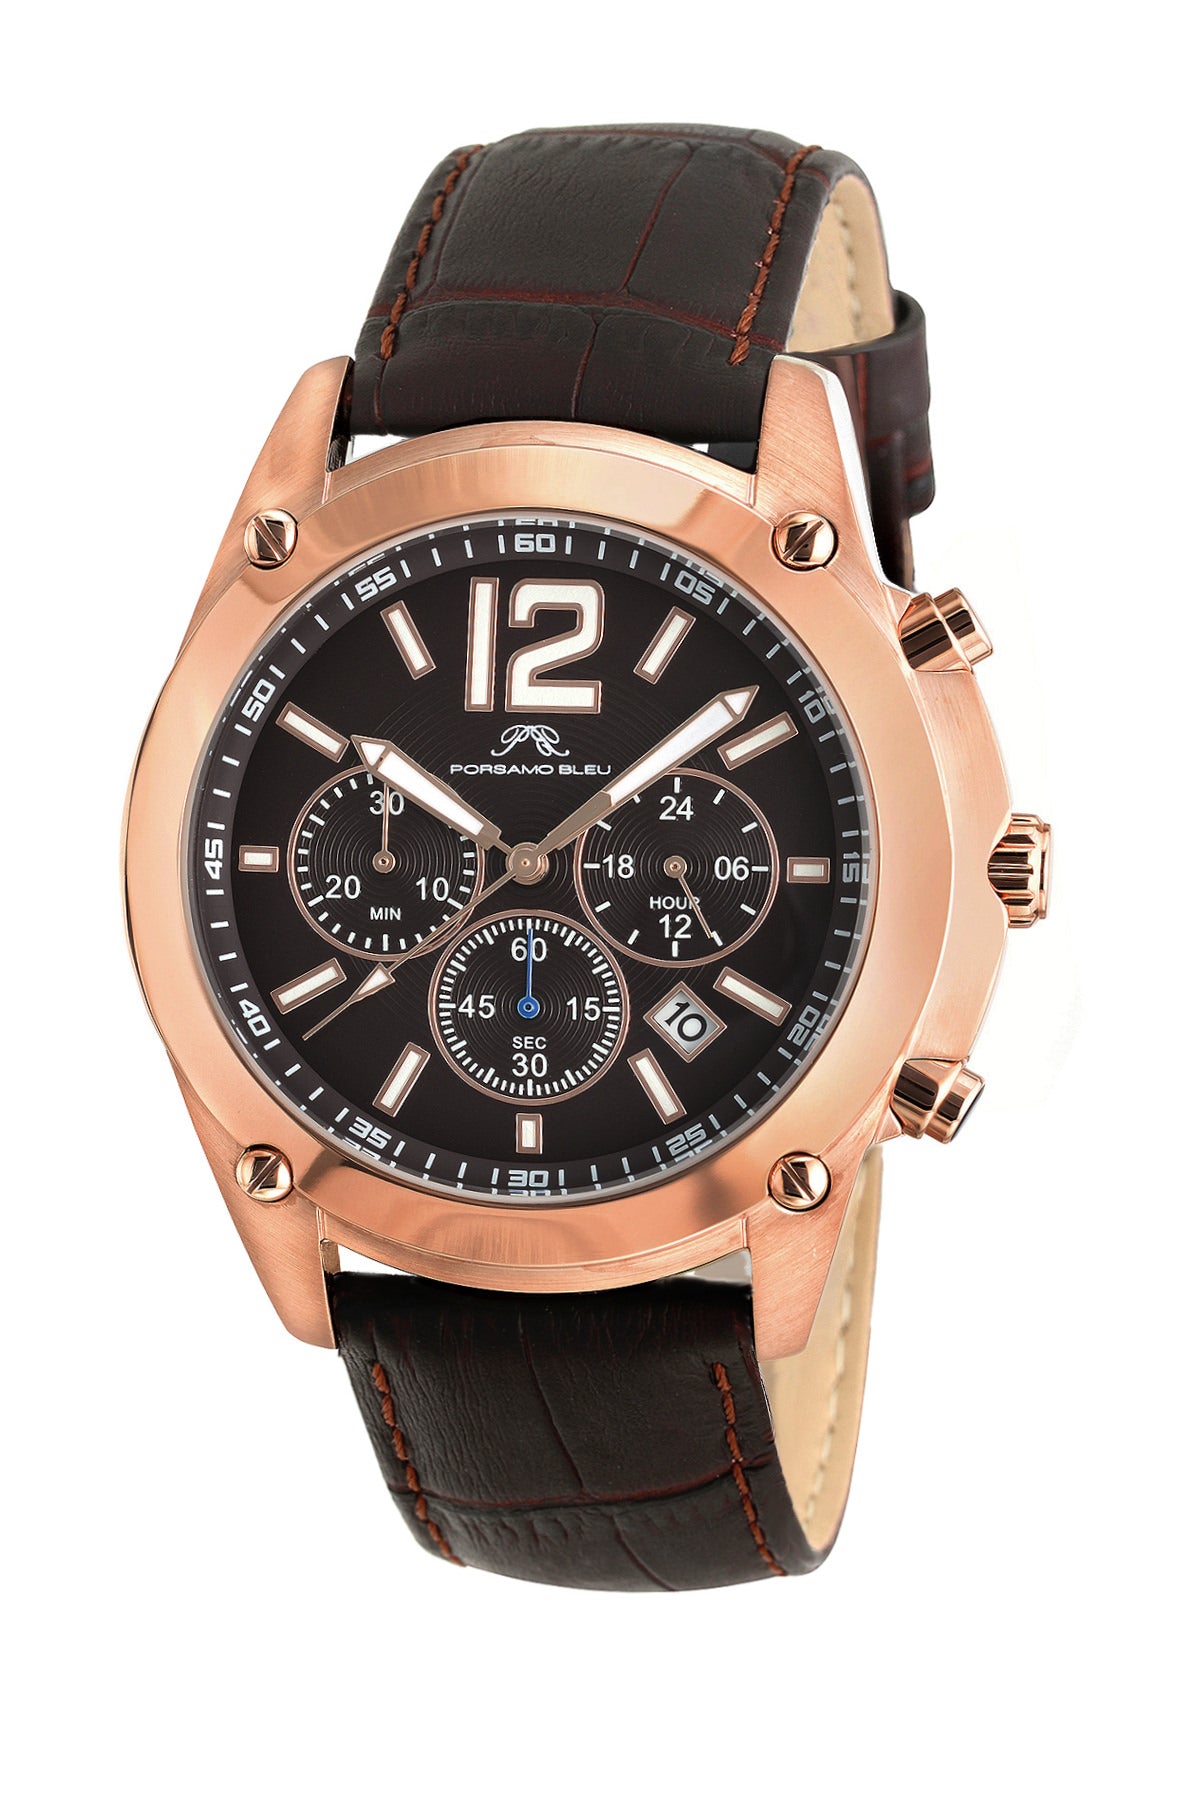 Porsamo Bleu Nathan luxury chronograph men's watch, genuine leather band, rose, brown 641CNAL